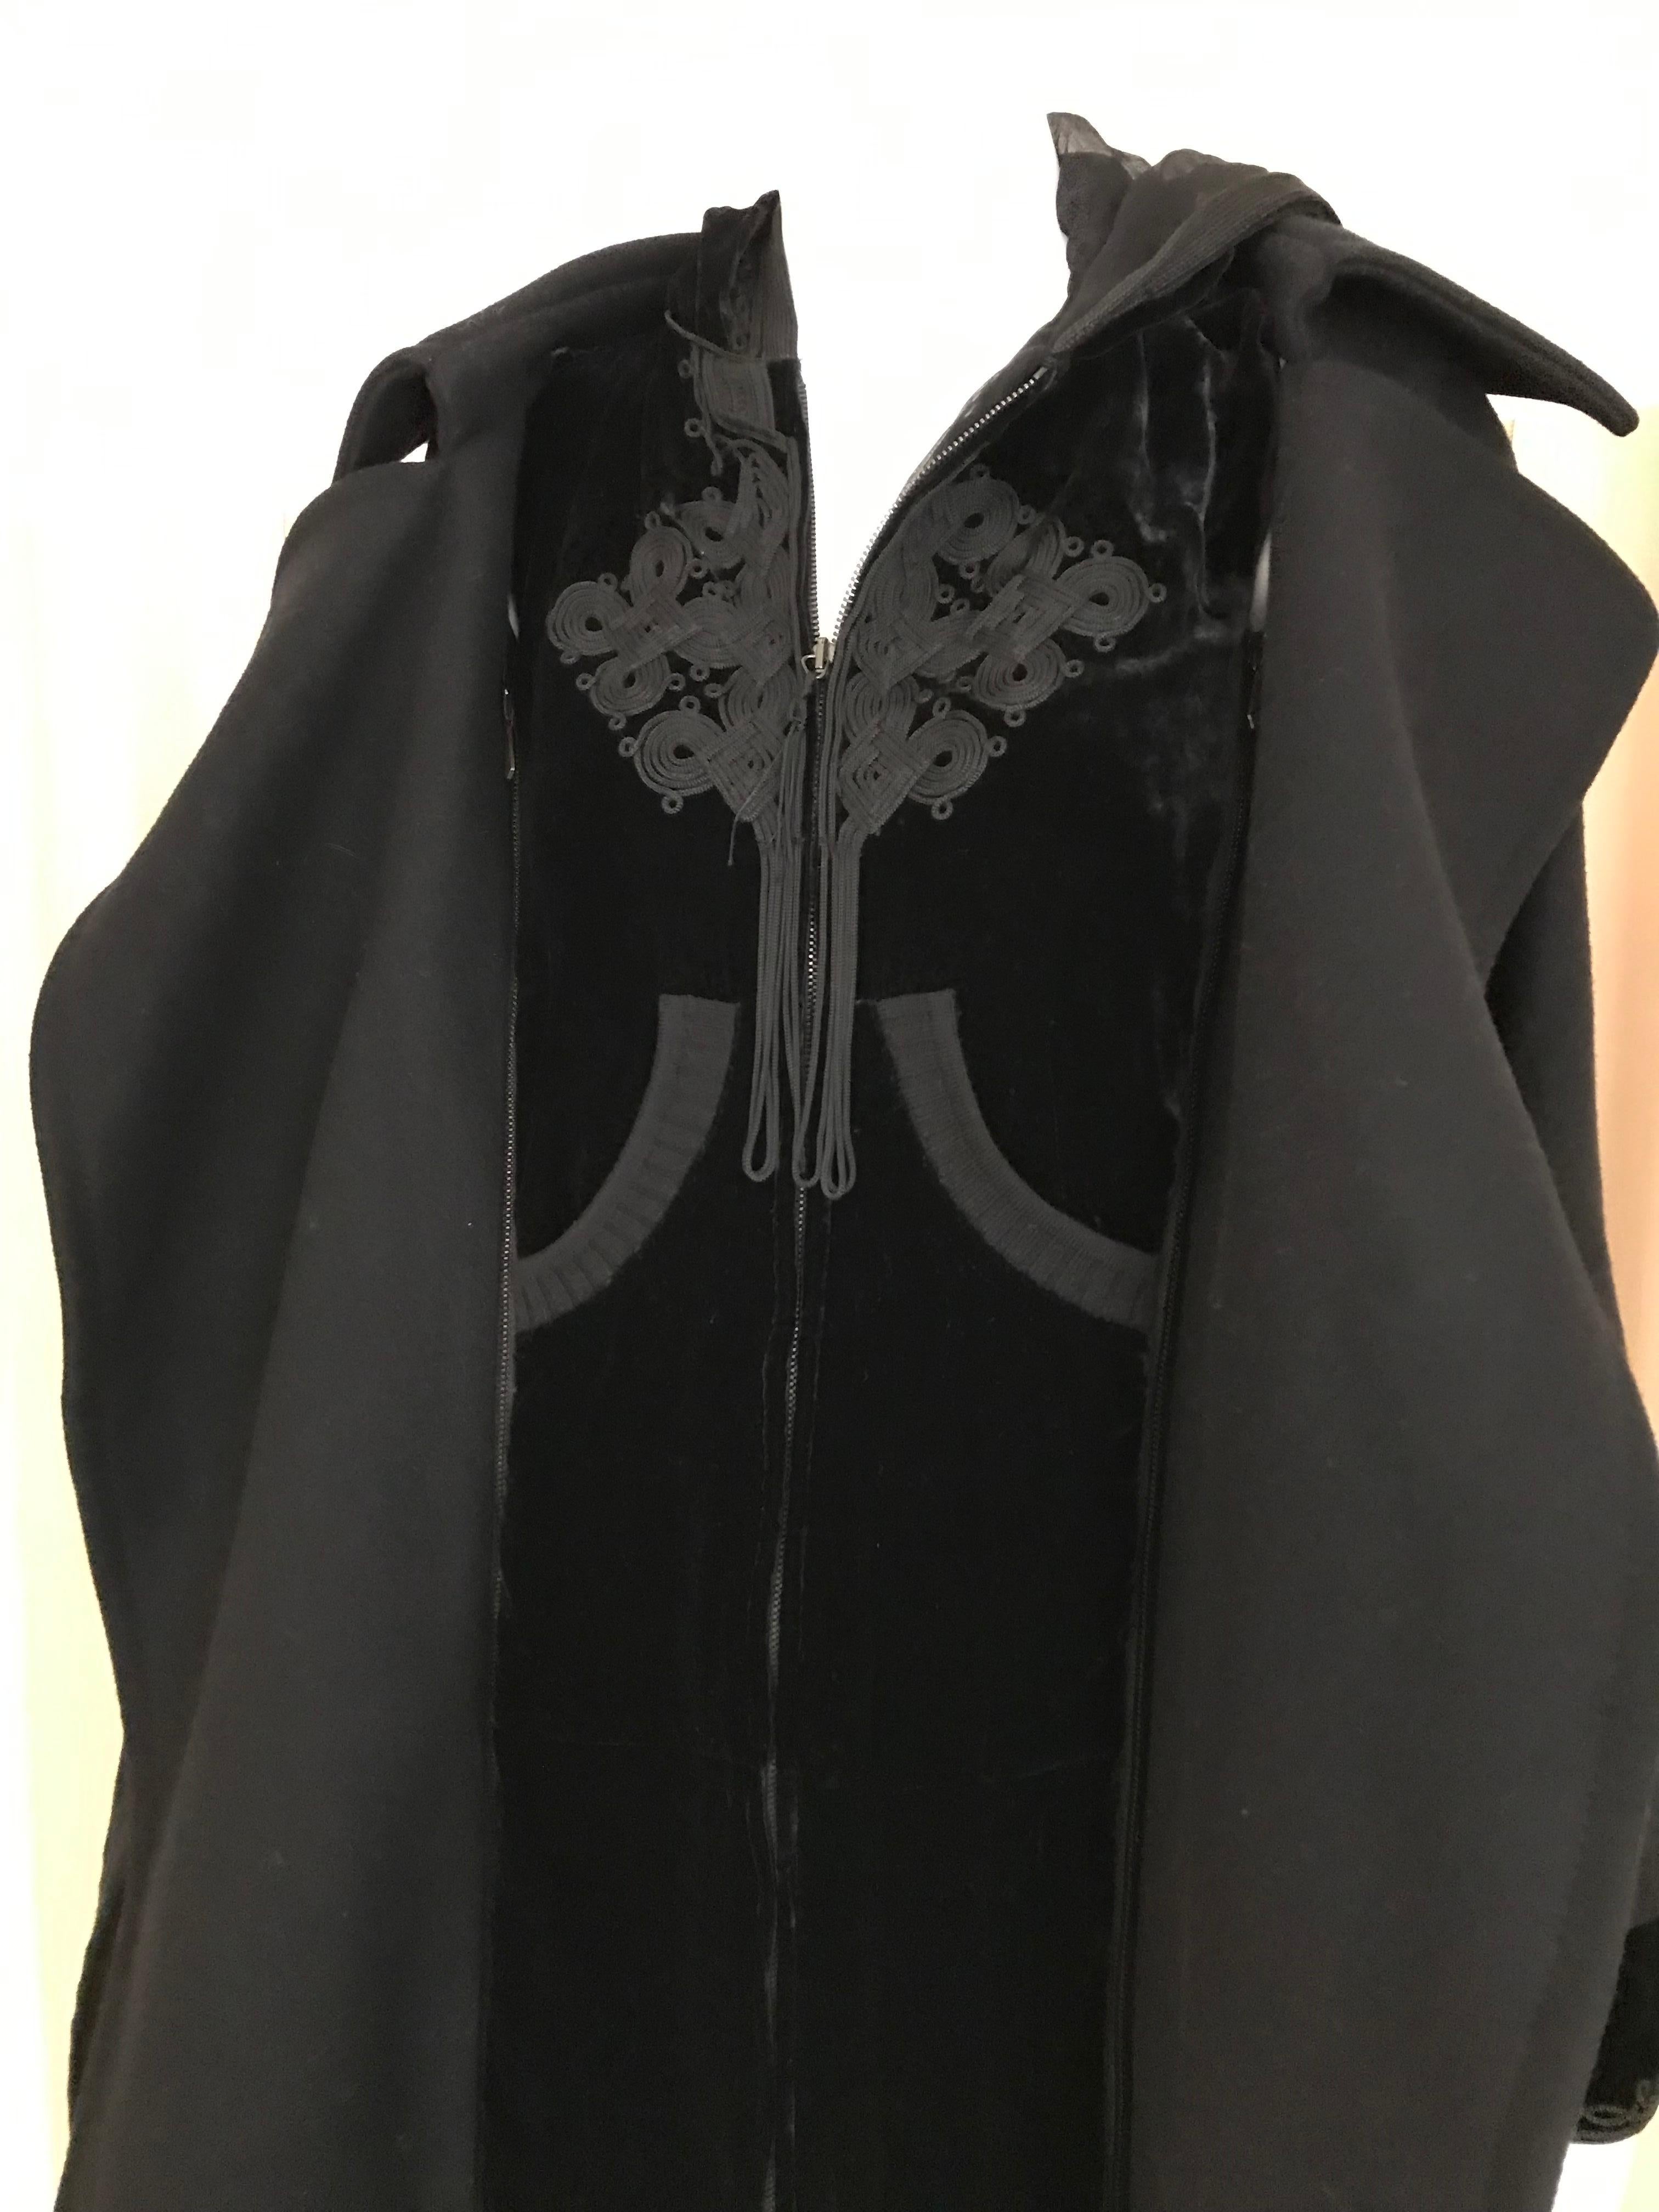 Jean Paul Gaultier Black Wool Coat with Silk Velvet Layer and Hood 5